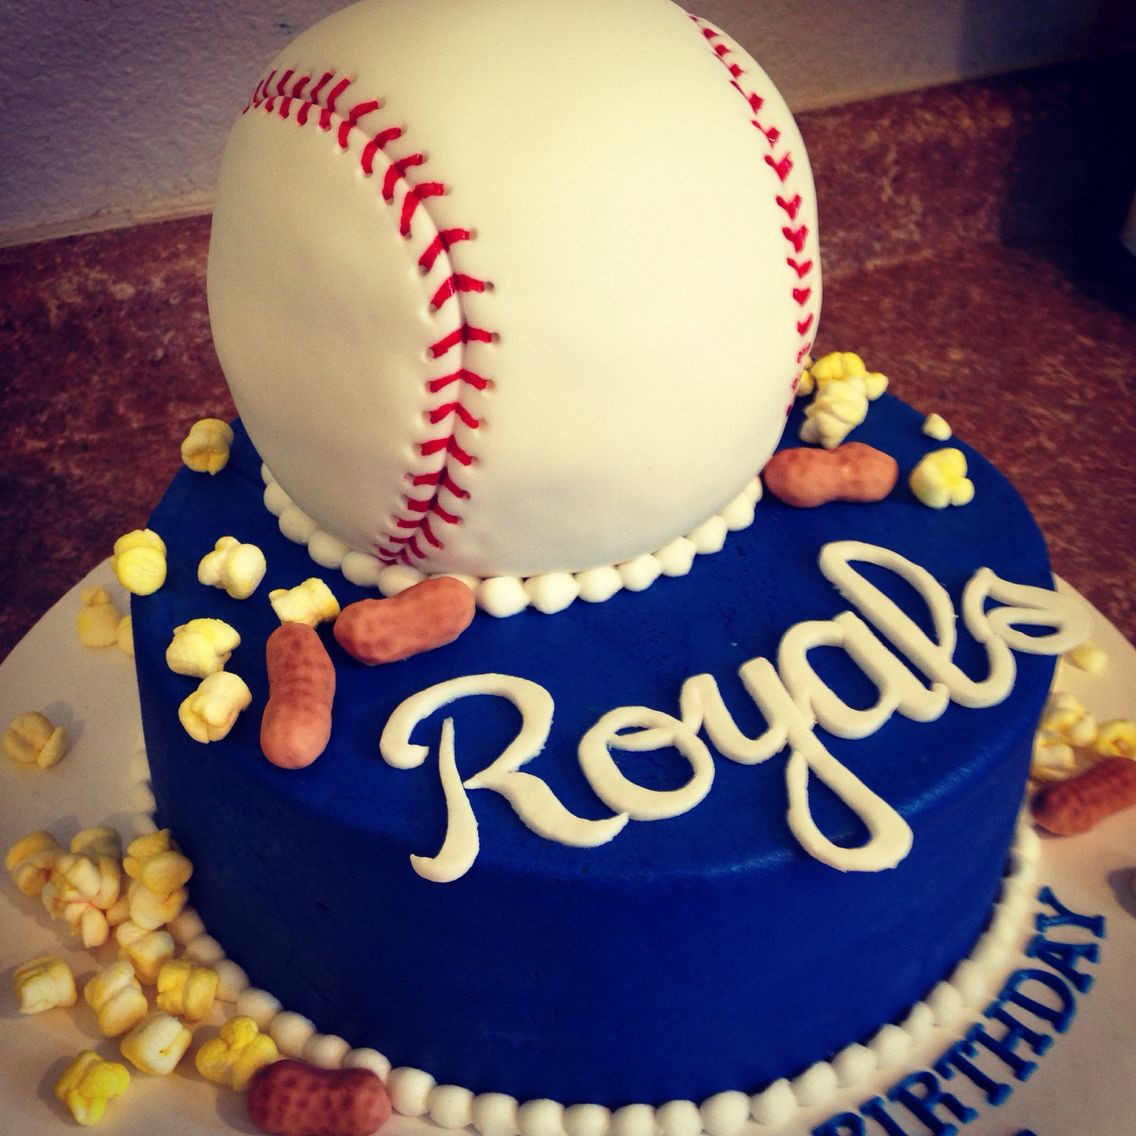 Birthday Cakes Kansas City
 Kansas City Royals baseball cake with popcorn and peanuts